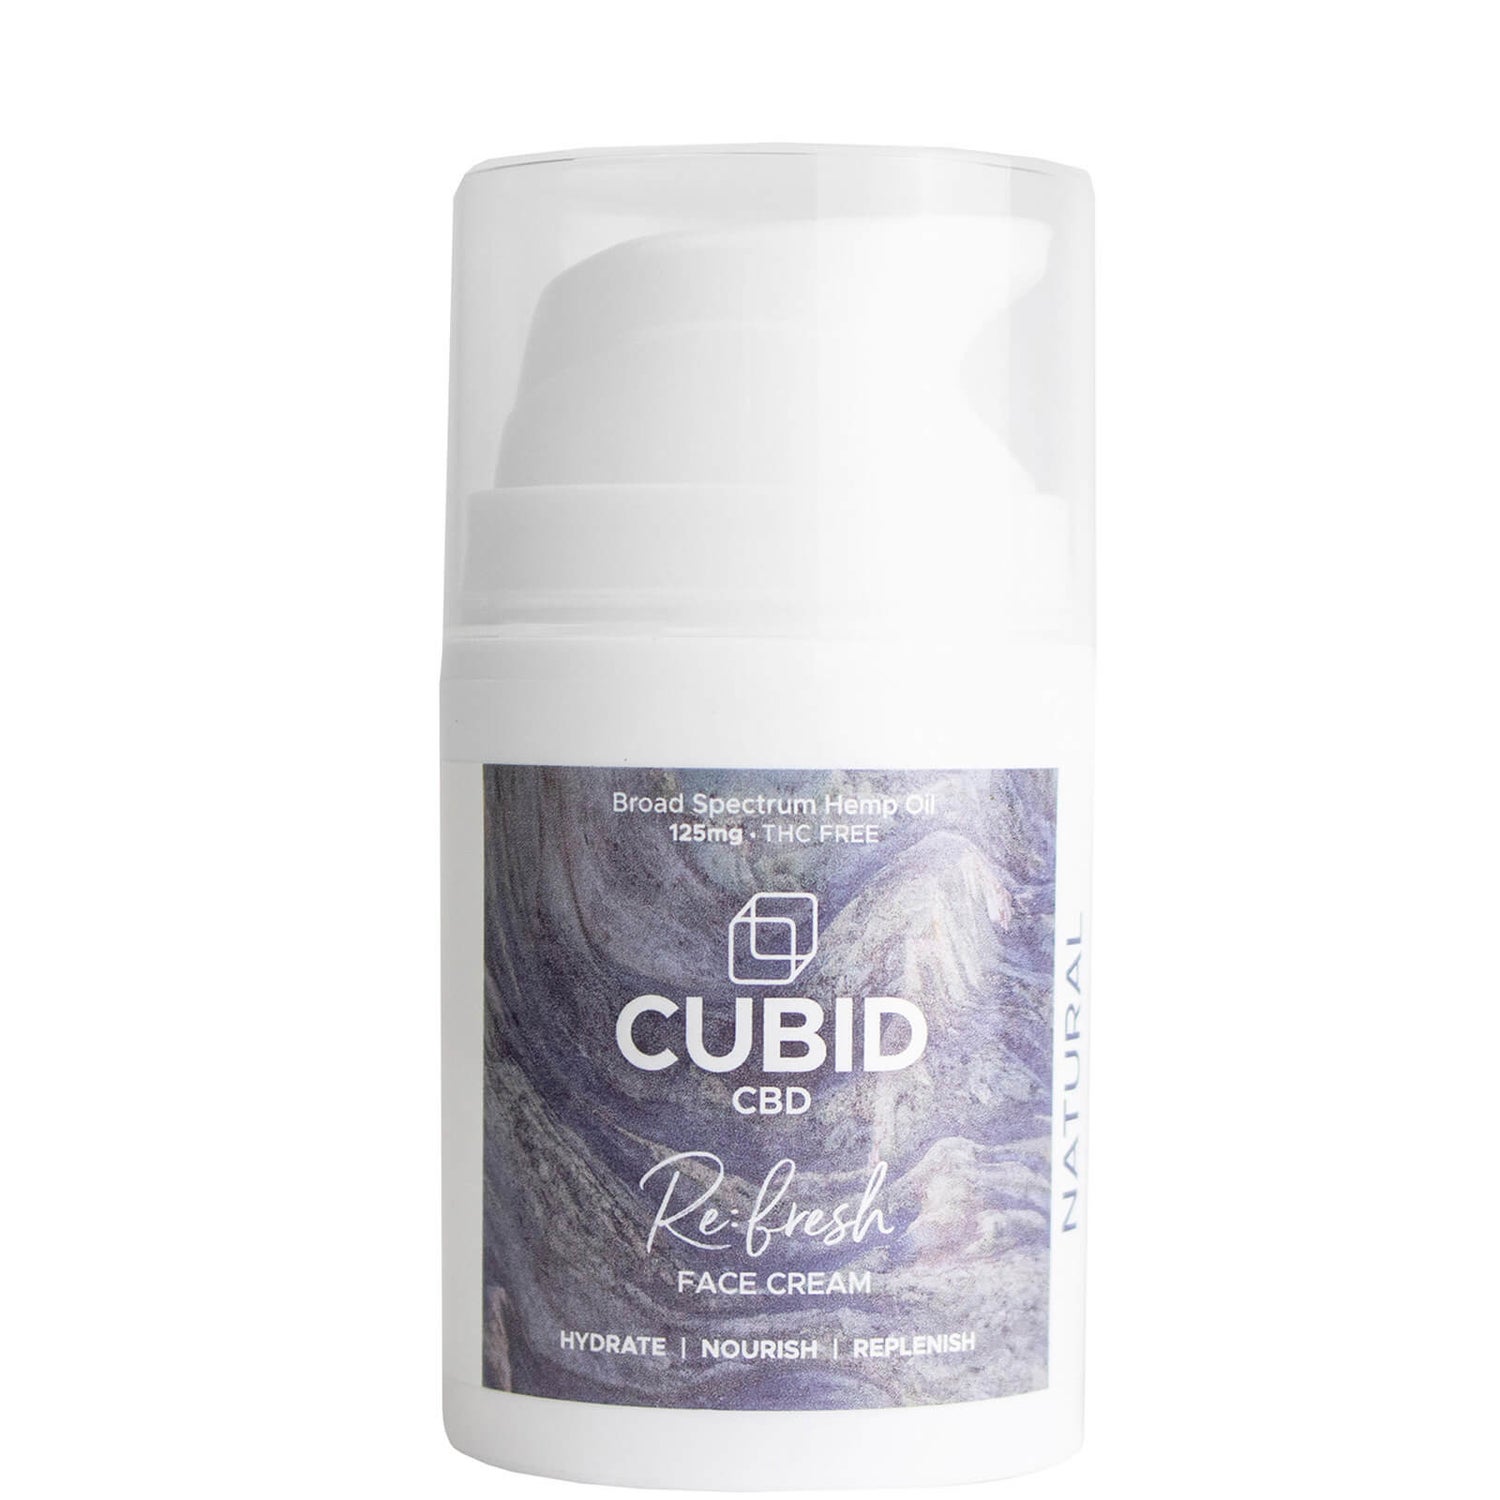 Cubid CBD Re:fresh Face Cream